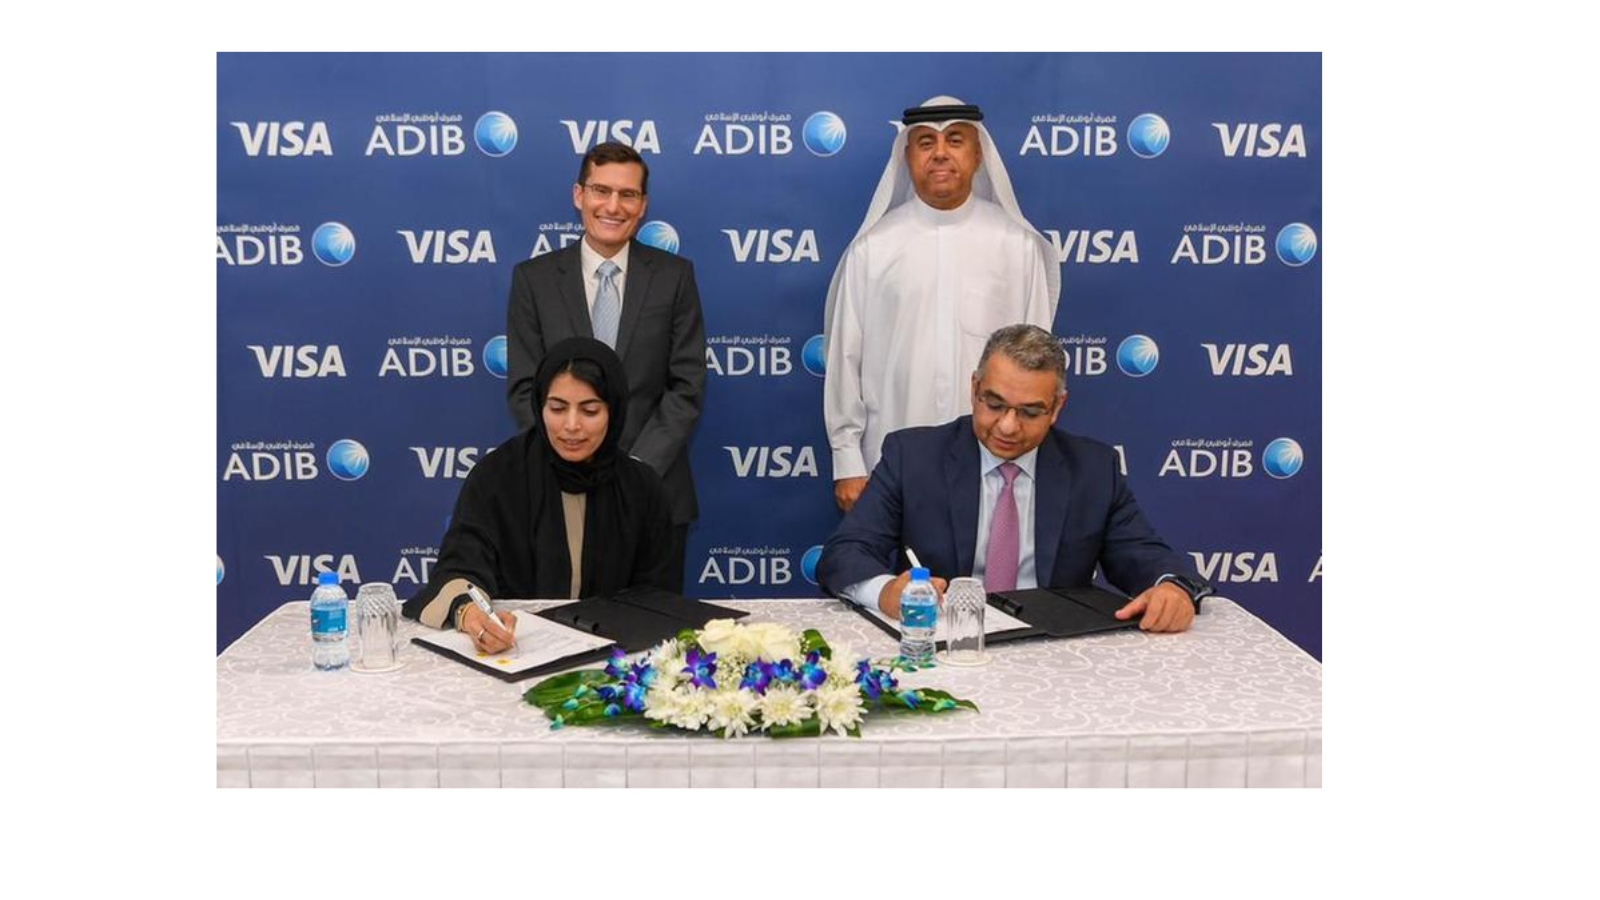 ADIB and VISA Partnership Agreement Signing Event